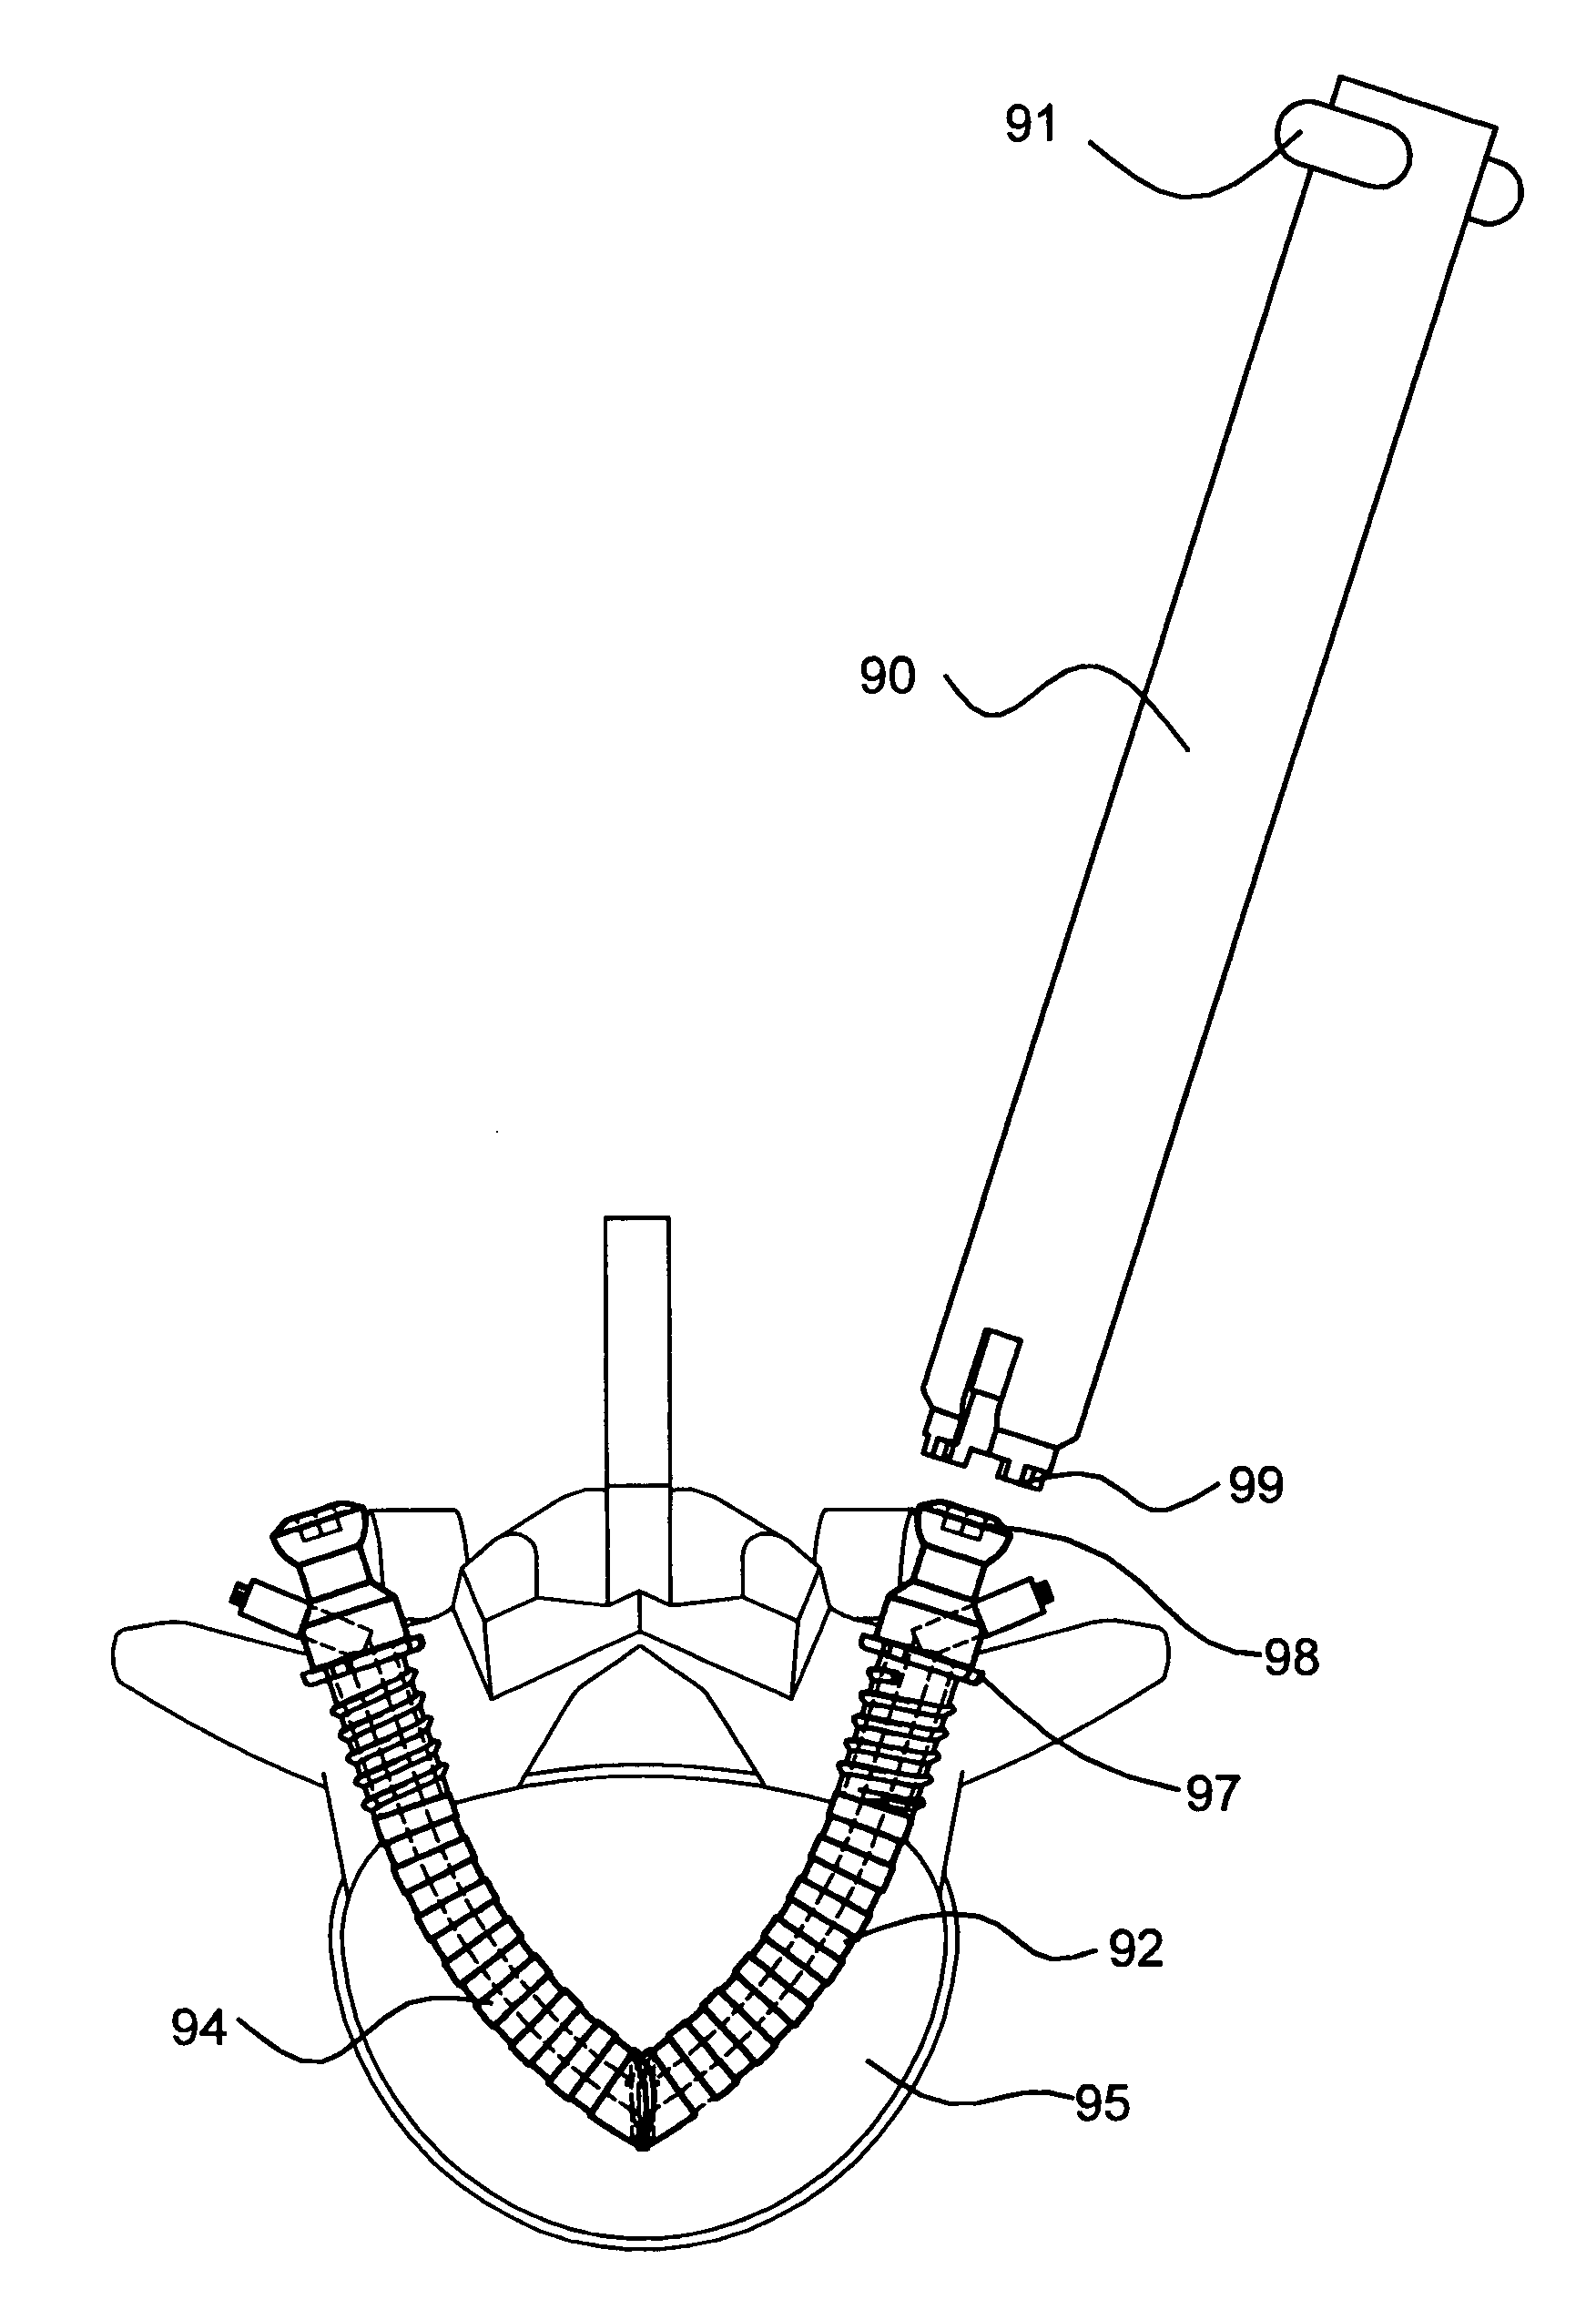 Bone anchoring system